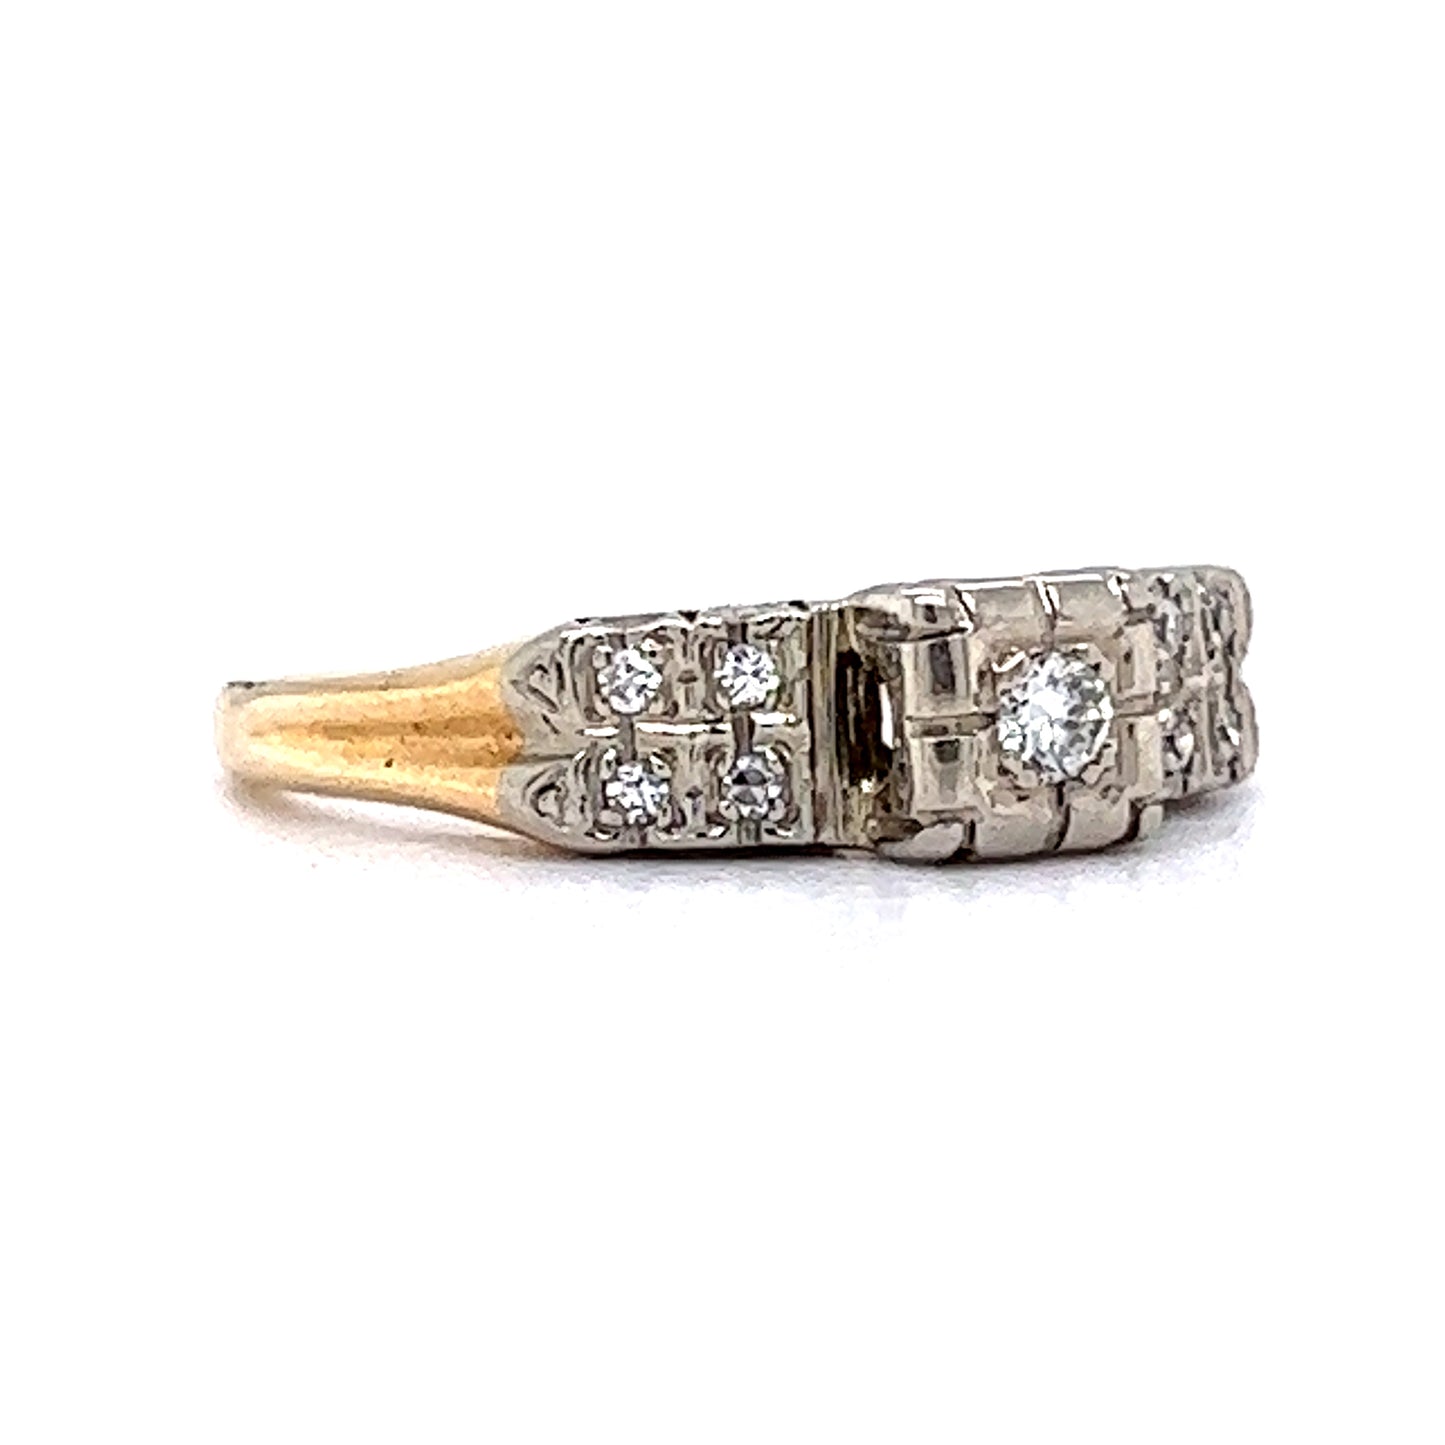 1940's Diamond Retro Engagement Ring in 14k Yellow Gold